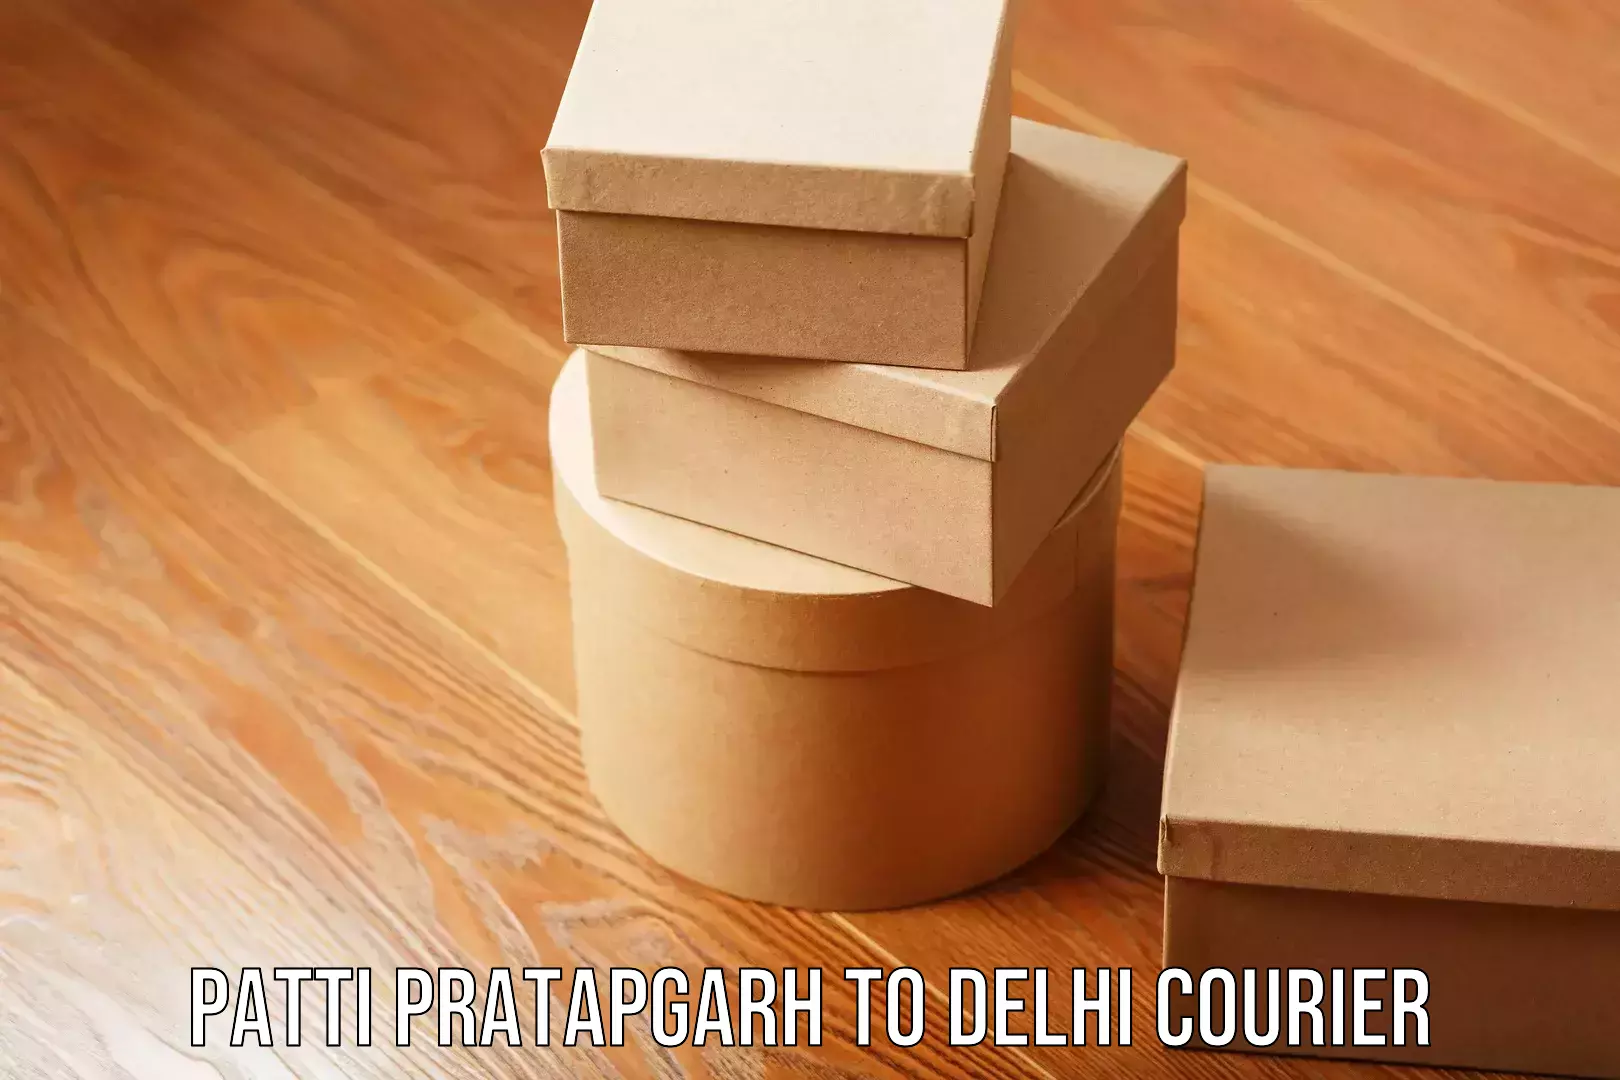 Household moving experts Patti Pratapgarh to Delhi